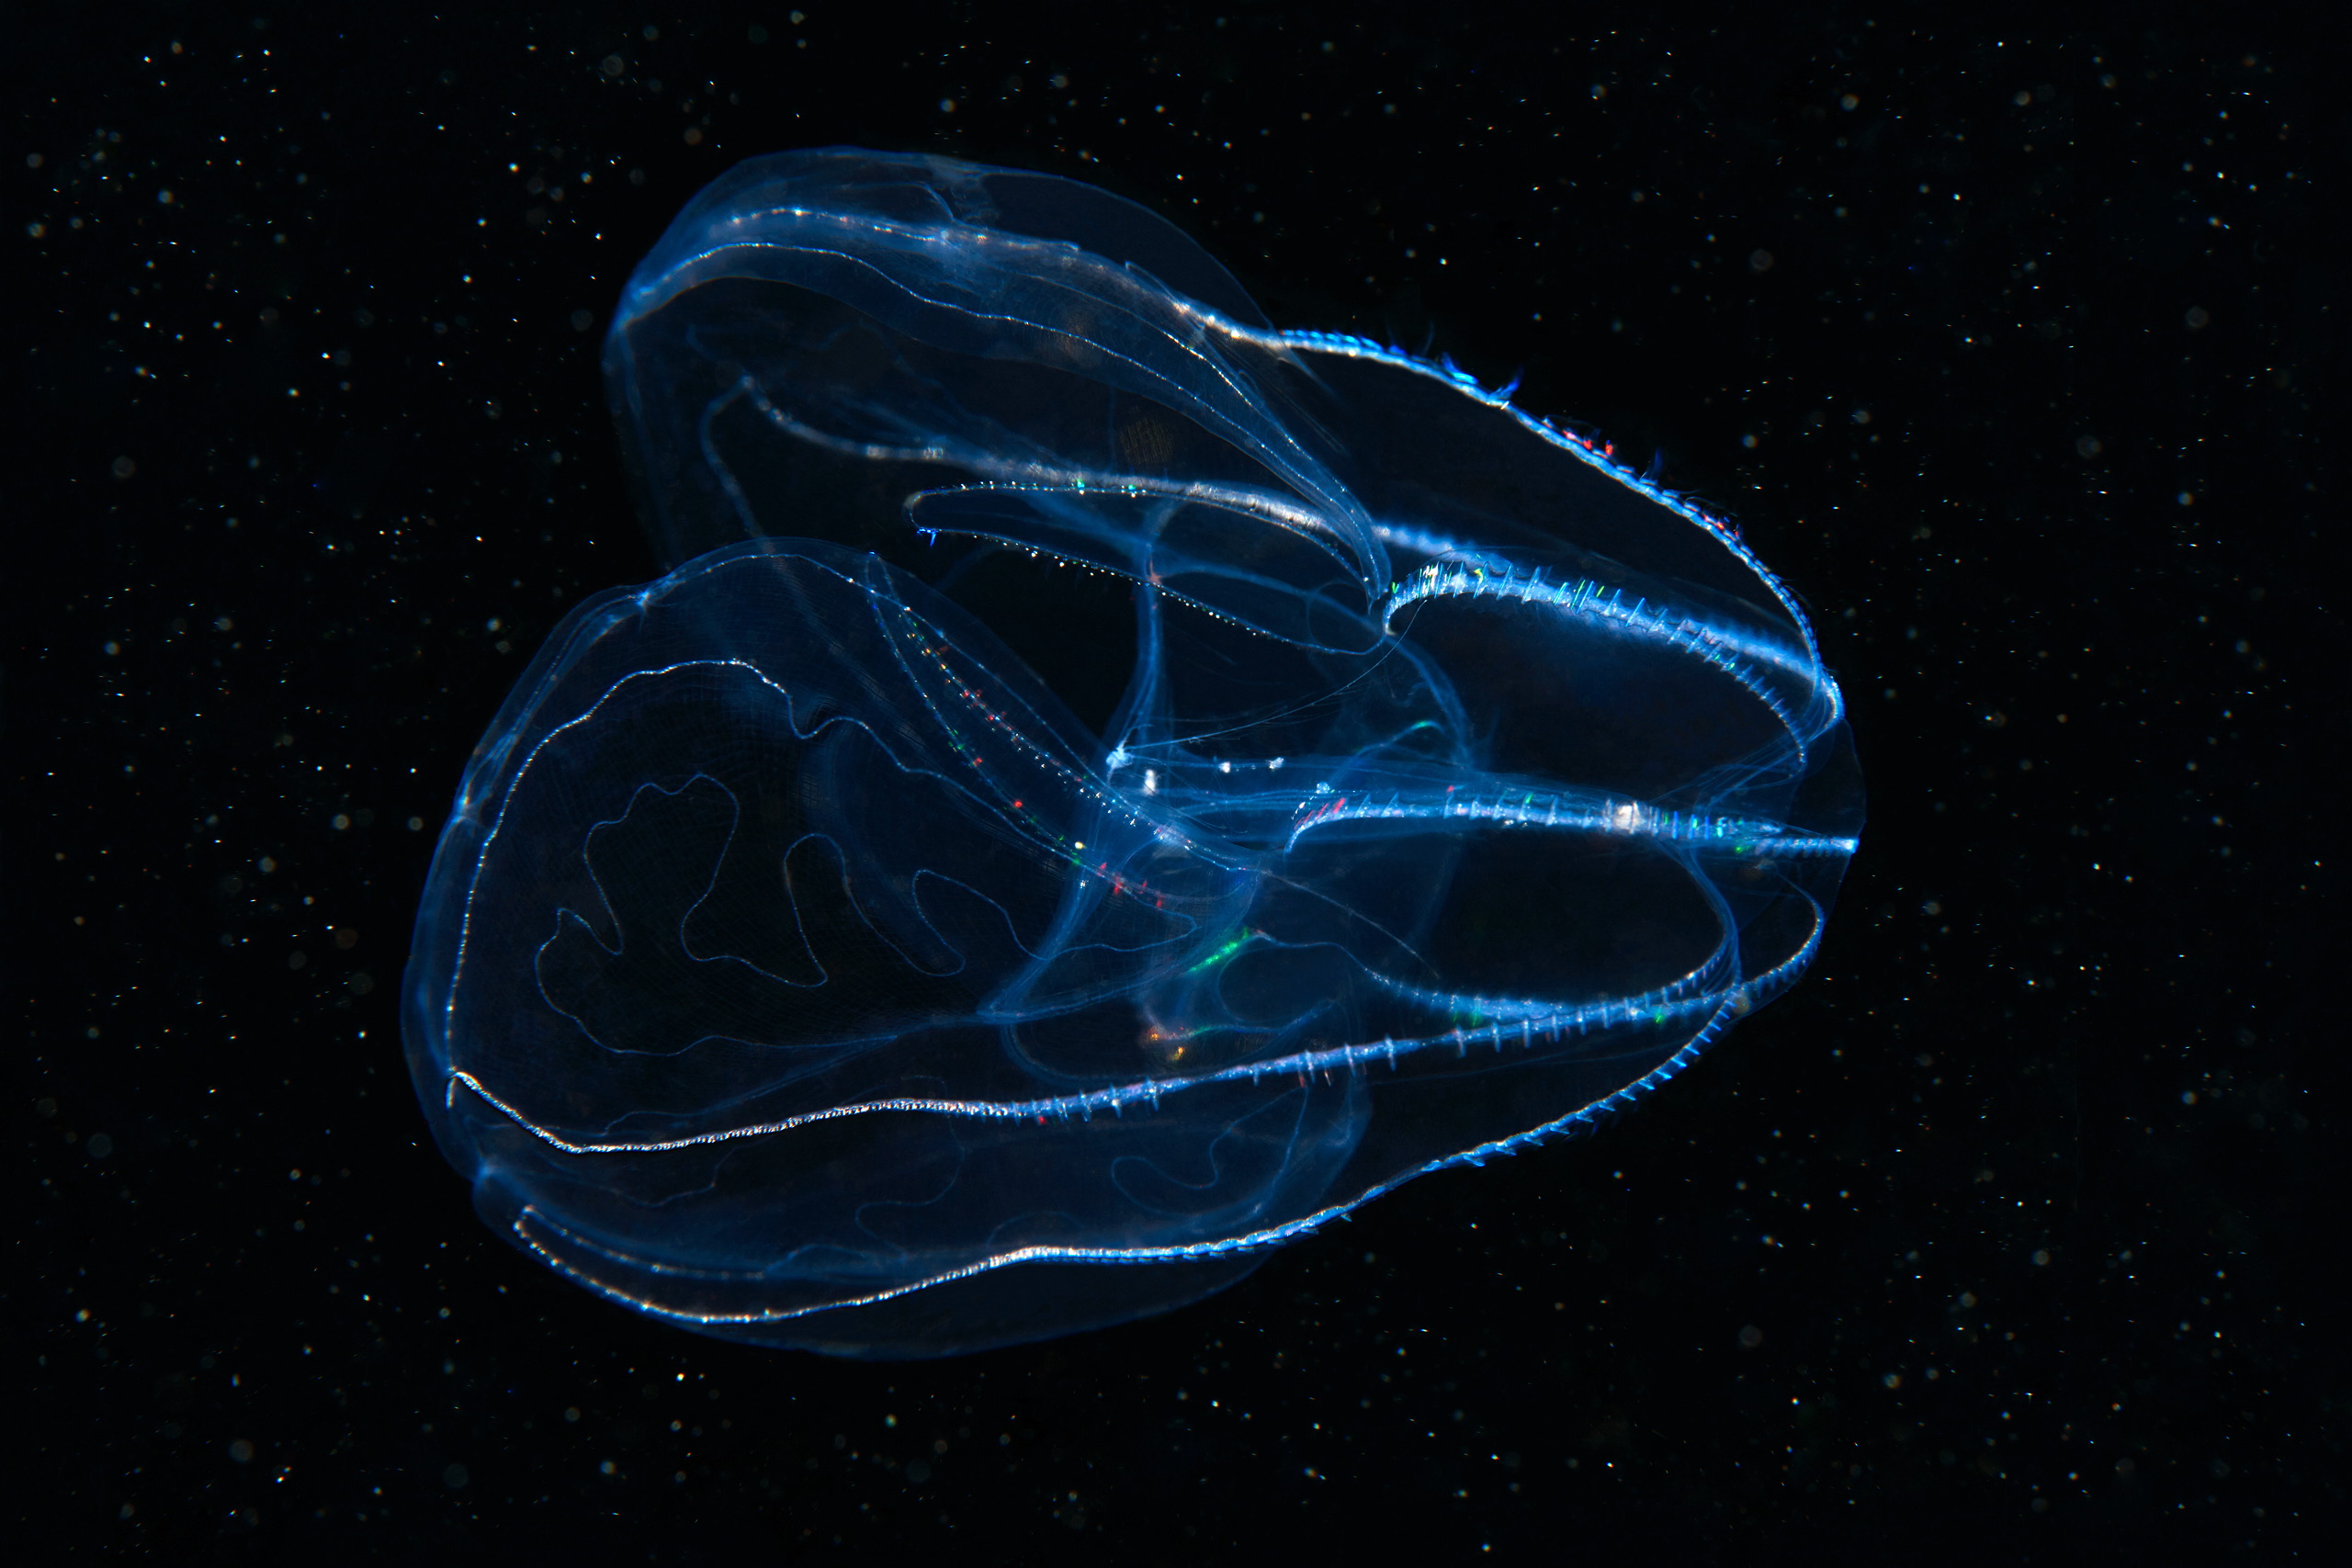 Ctenophora – Comb jelly – Bolinopsis infundibulum 03